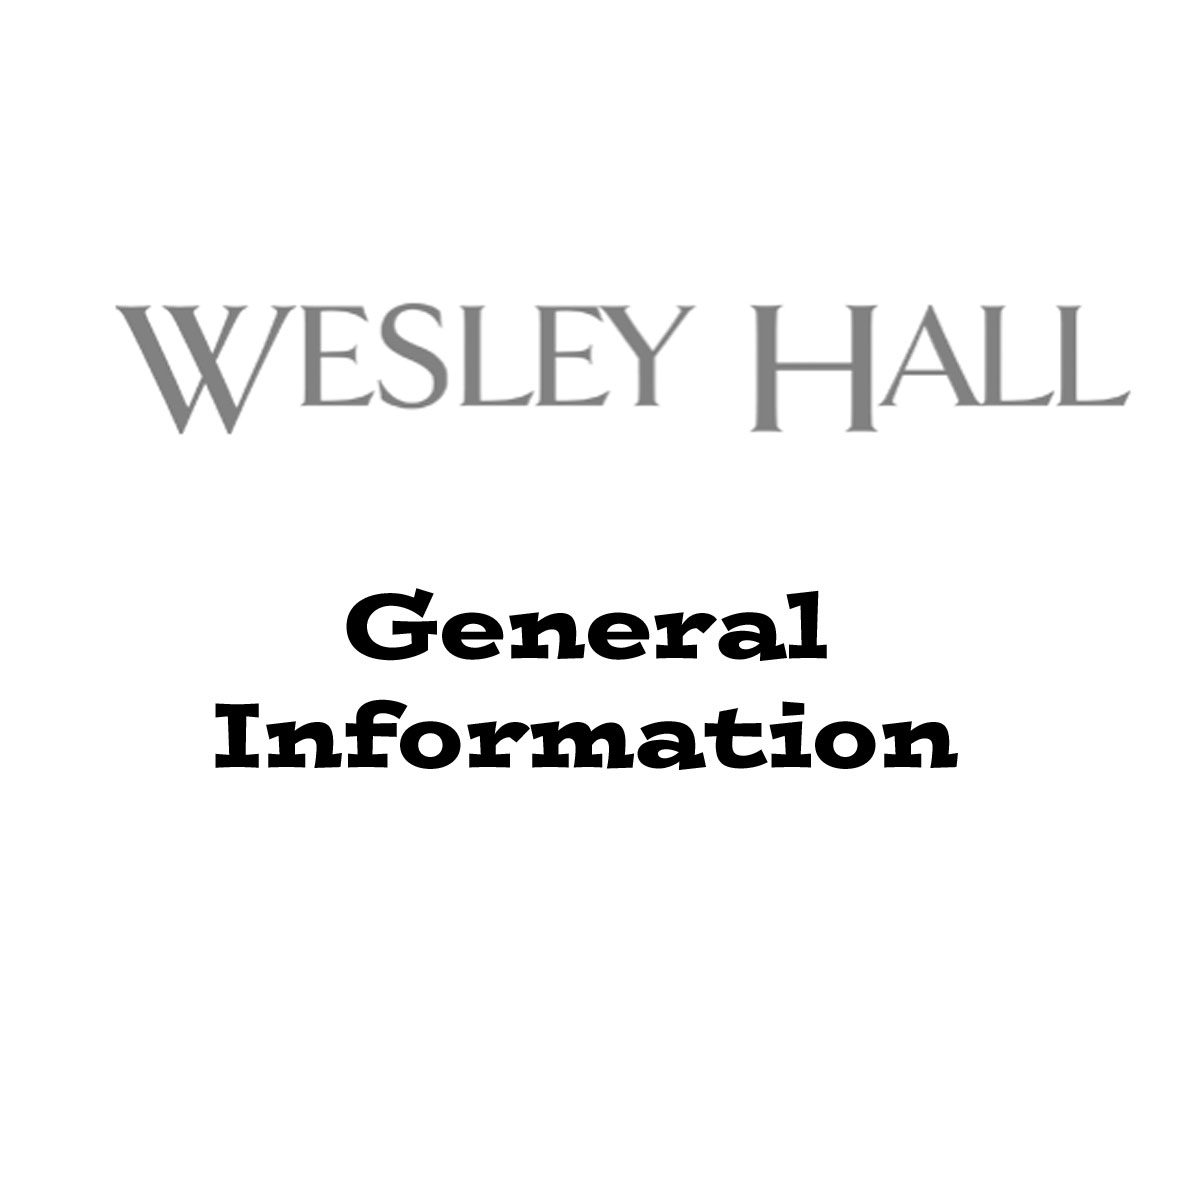   Wesley Hall General Information